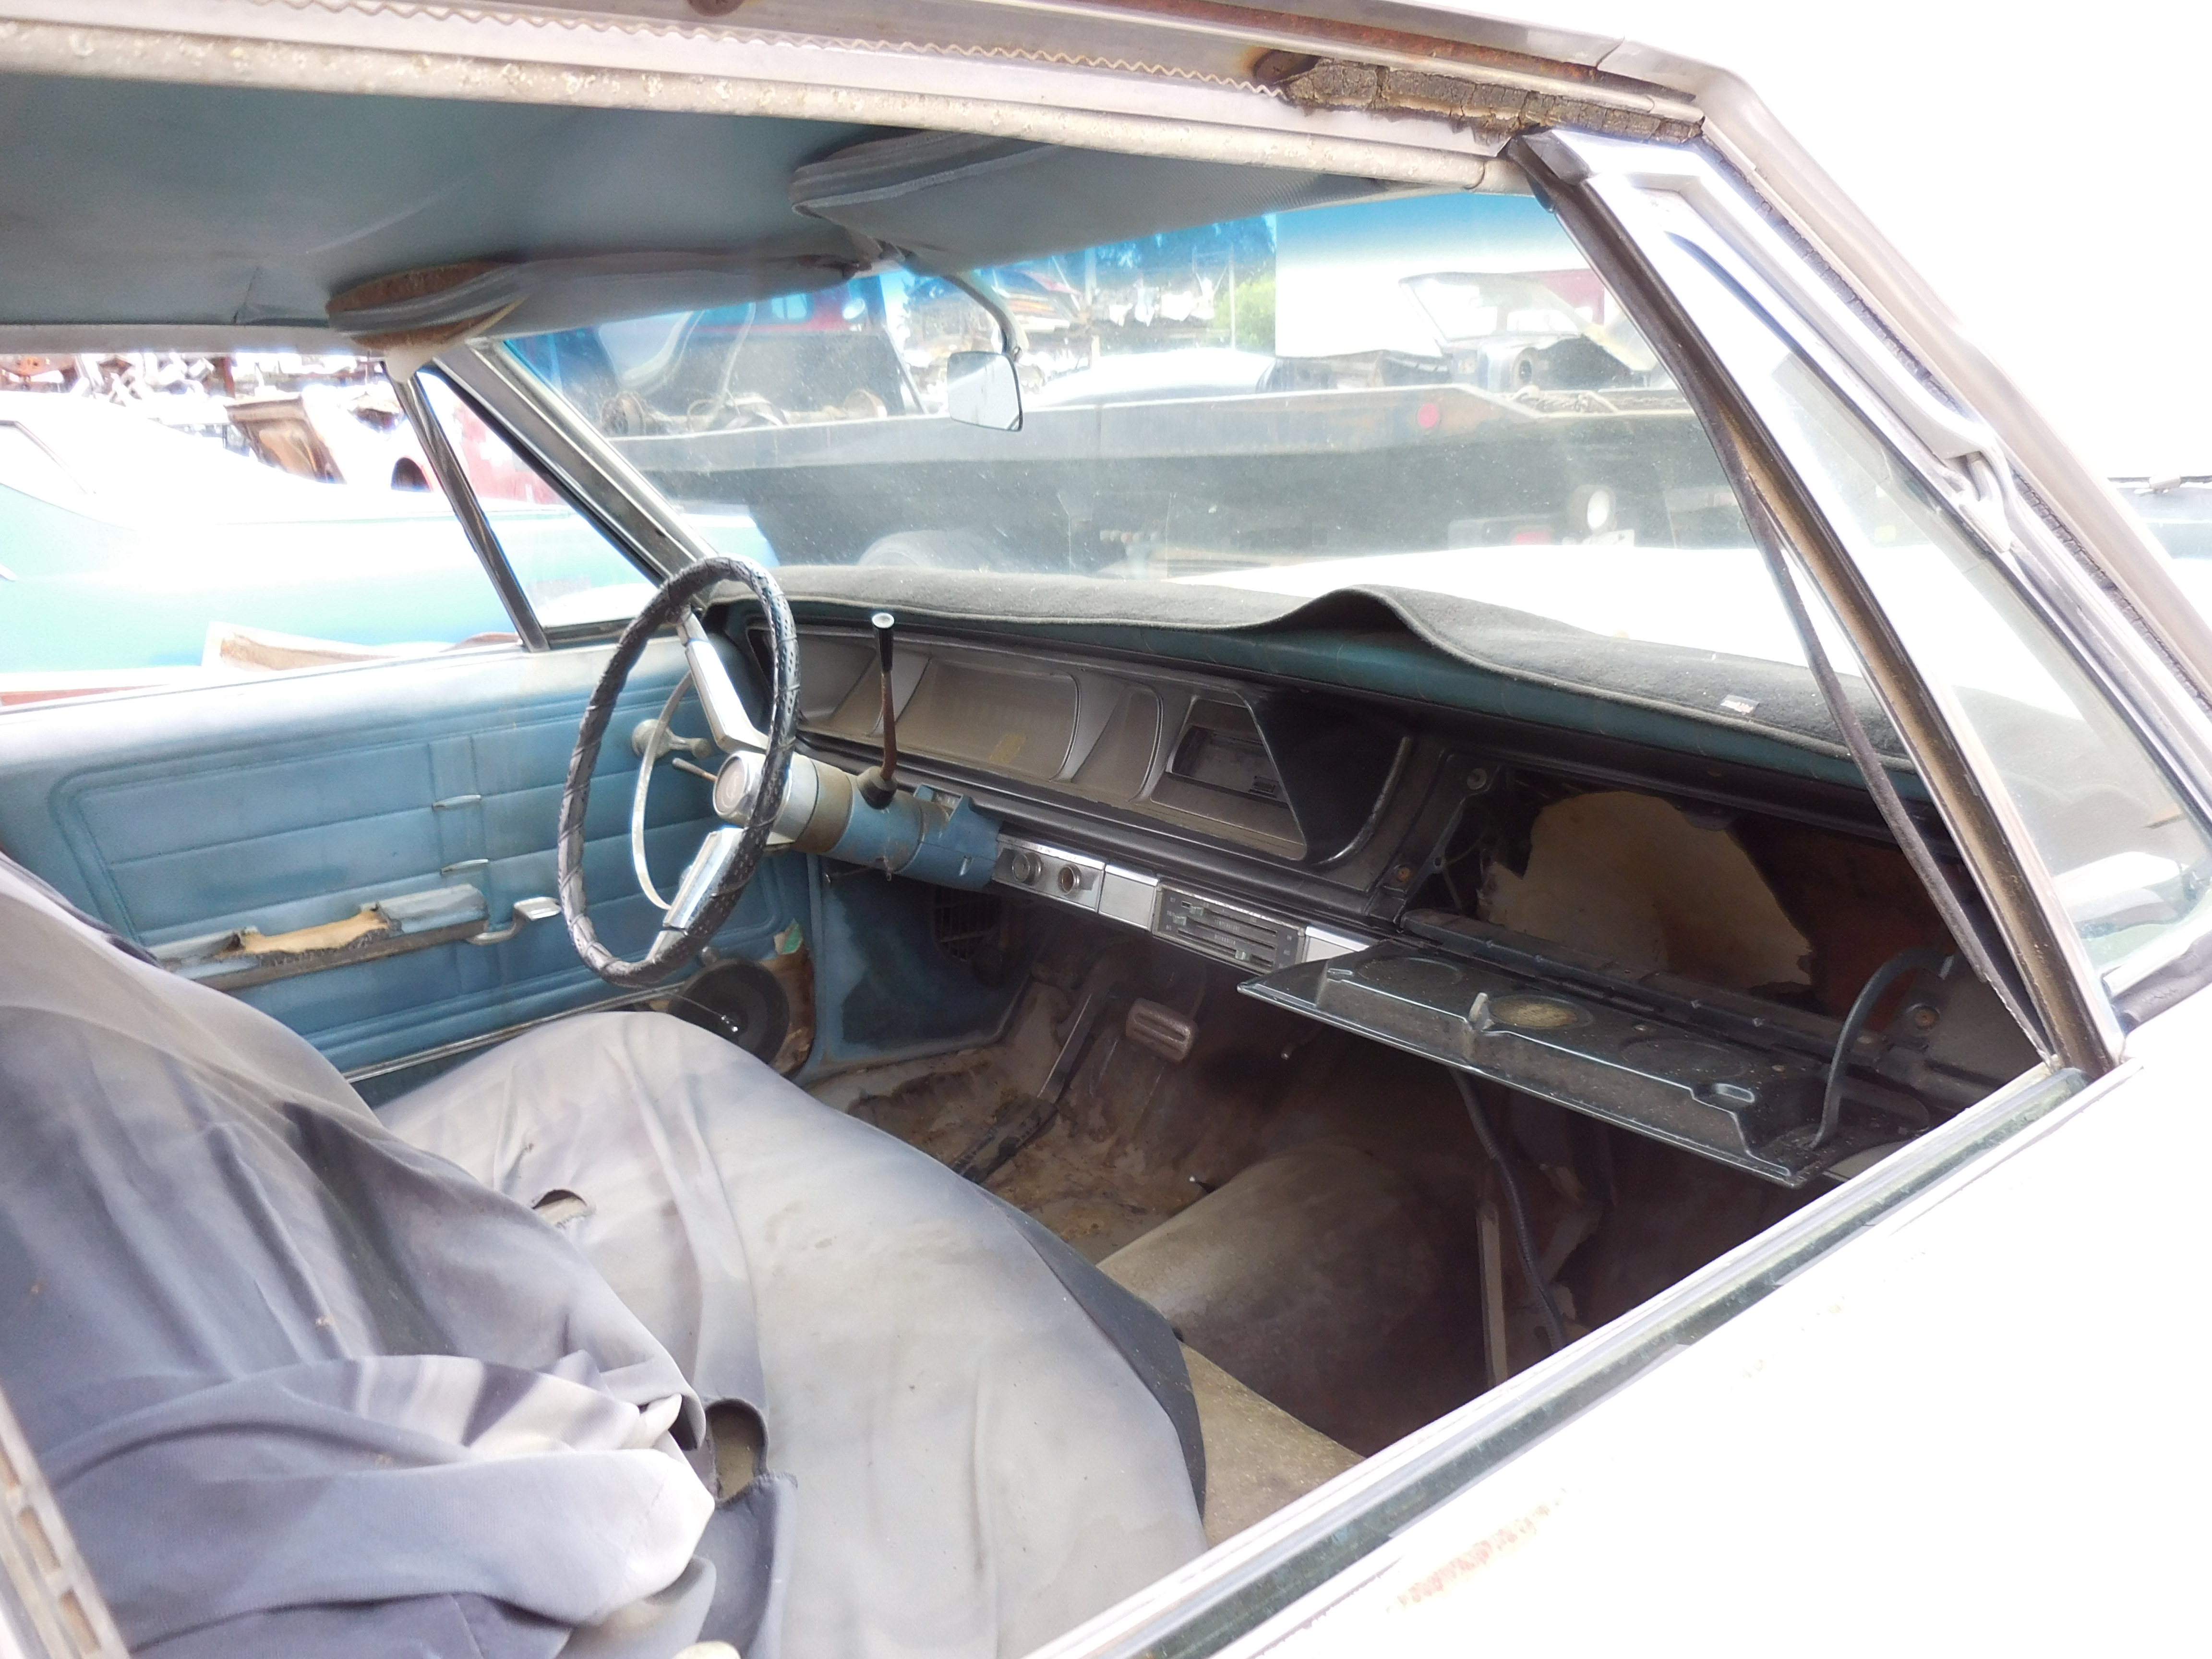 1966, Chevrolet, Impala, 4, Door,350, engine,motor, fender,door,dash,seat,hood,bumper front,rear,grill,header, panel,inner,glass,frame,suspension,th350,windshield, 